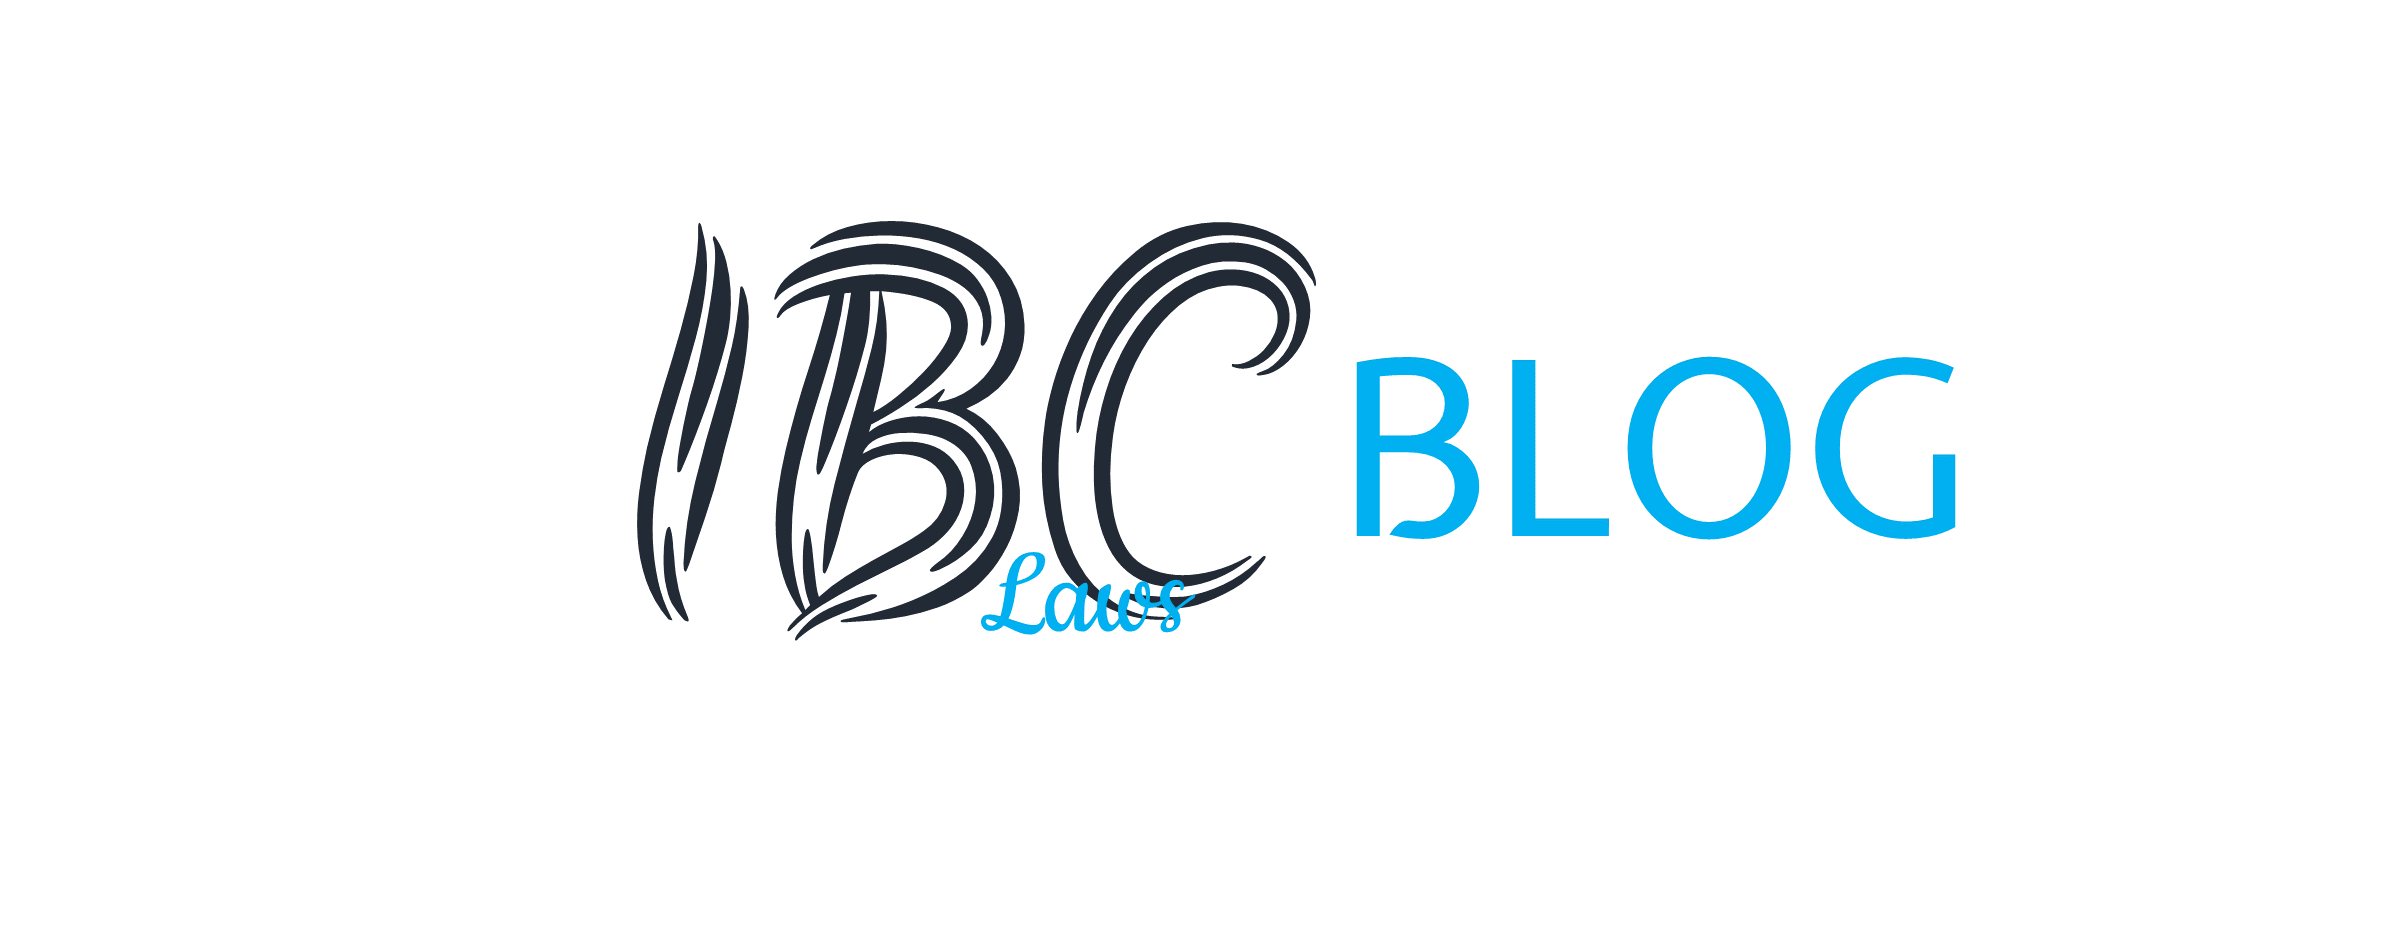 IBC Laws Blog